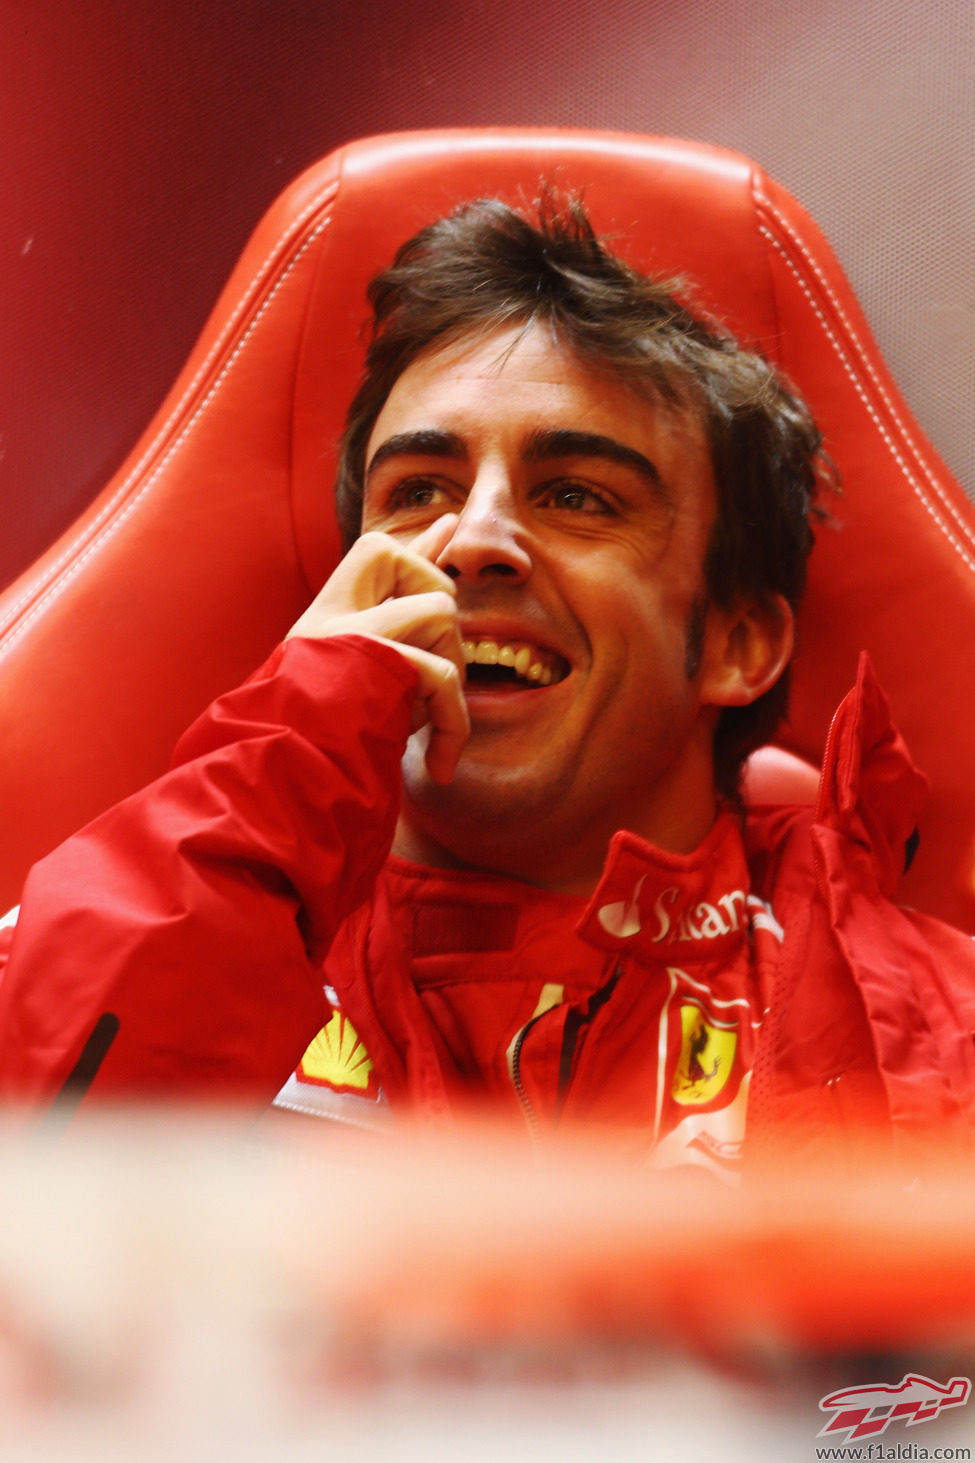 Fernando Alonso se parte de risa en el box de Ferrari